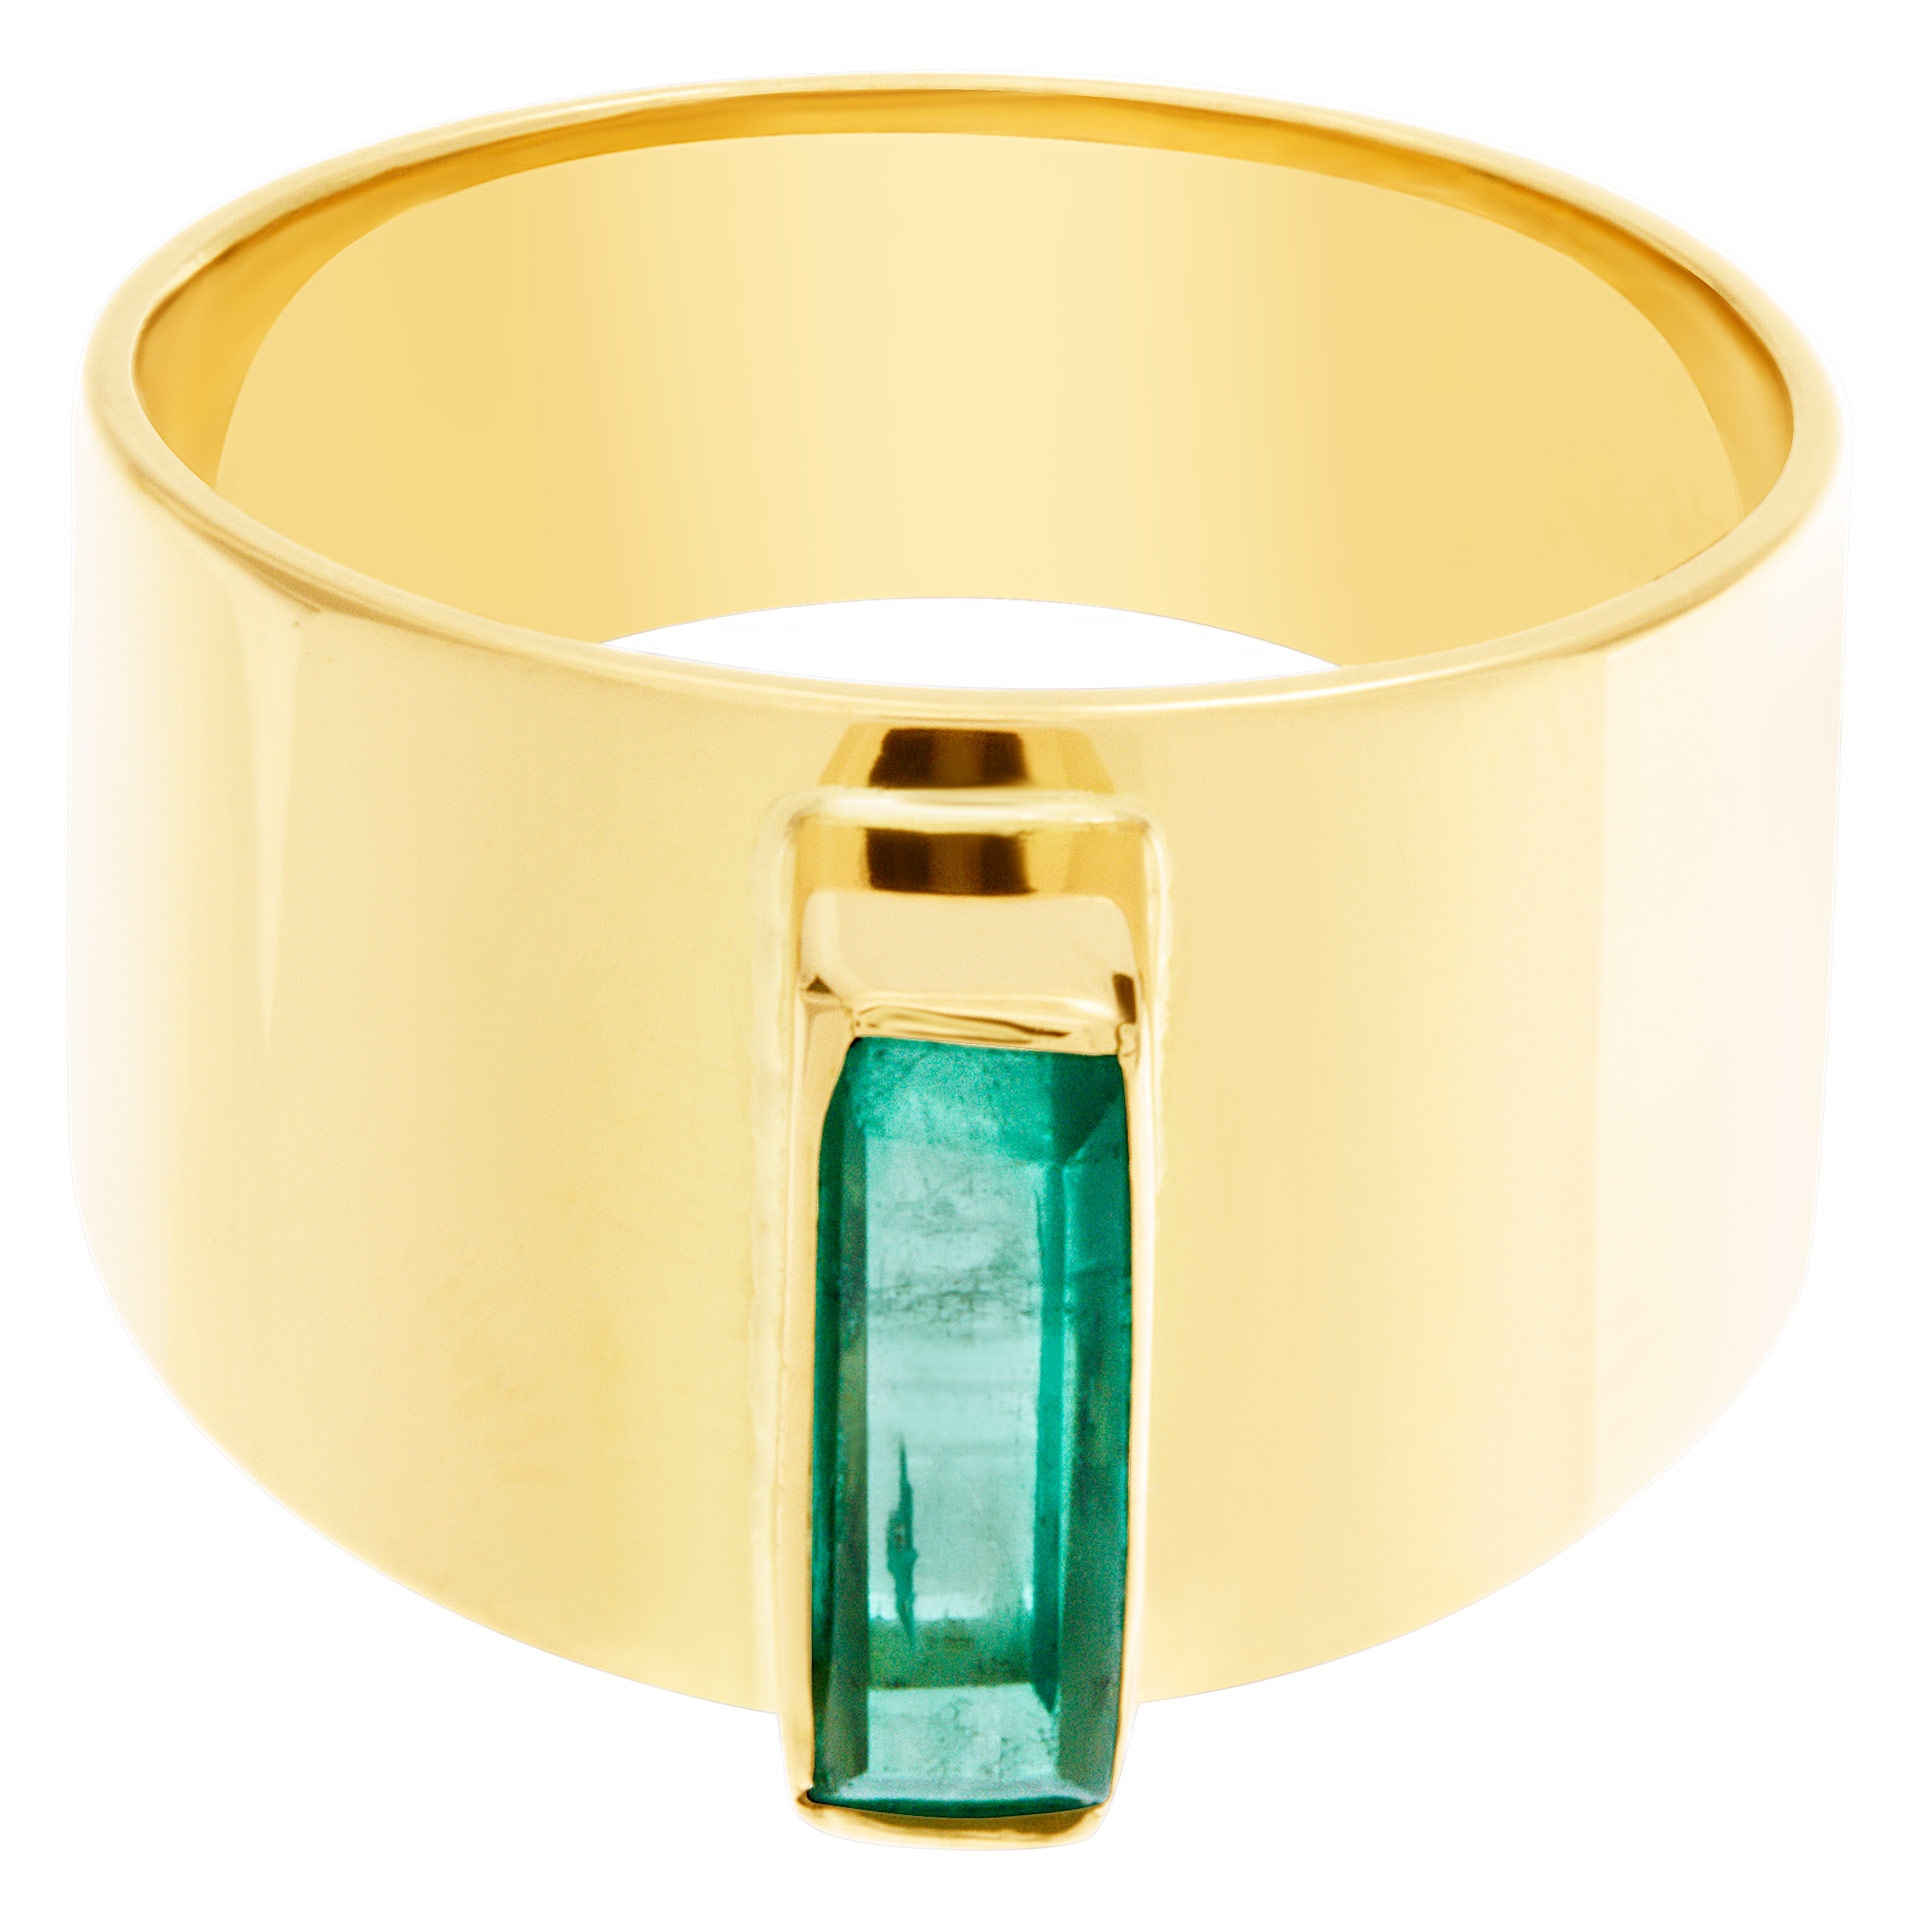 Guayasmin Emerald ring set in 18k yellow gold